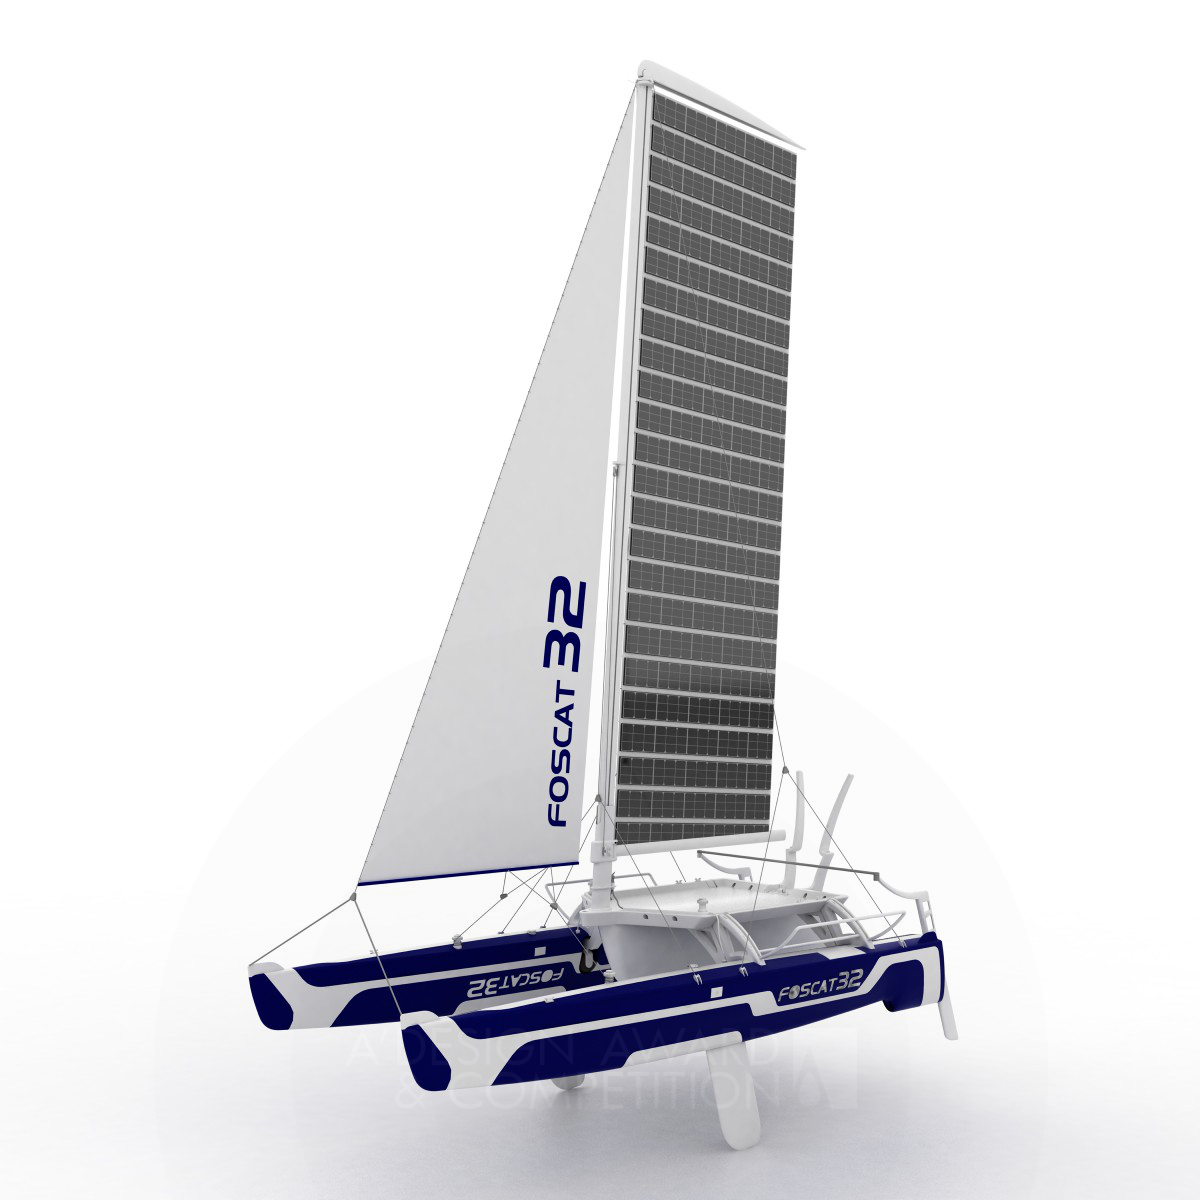 Good Folding Solar Catamaran Design